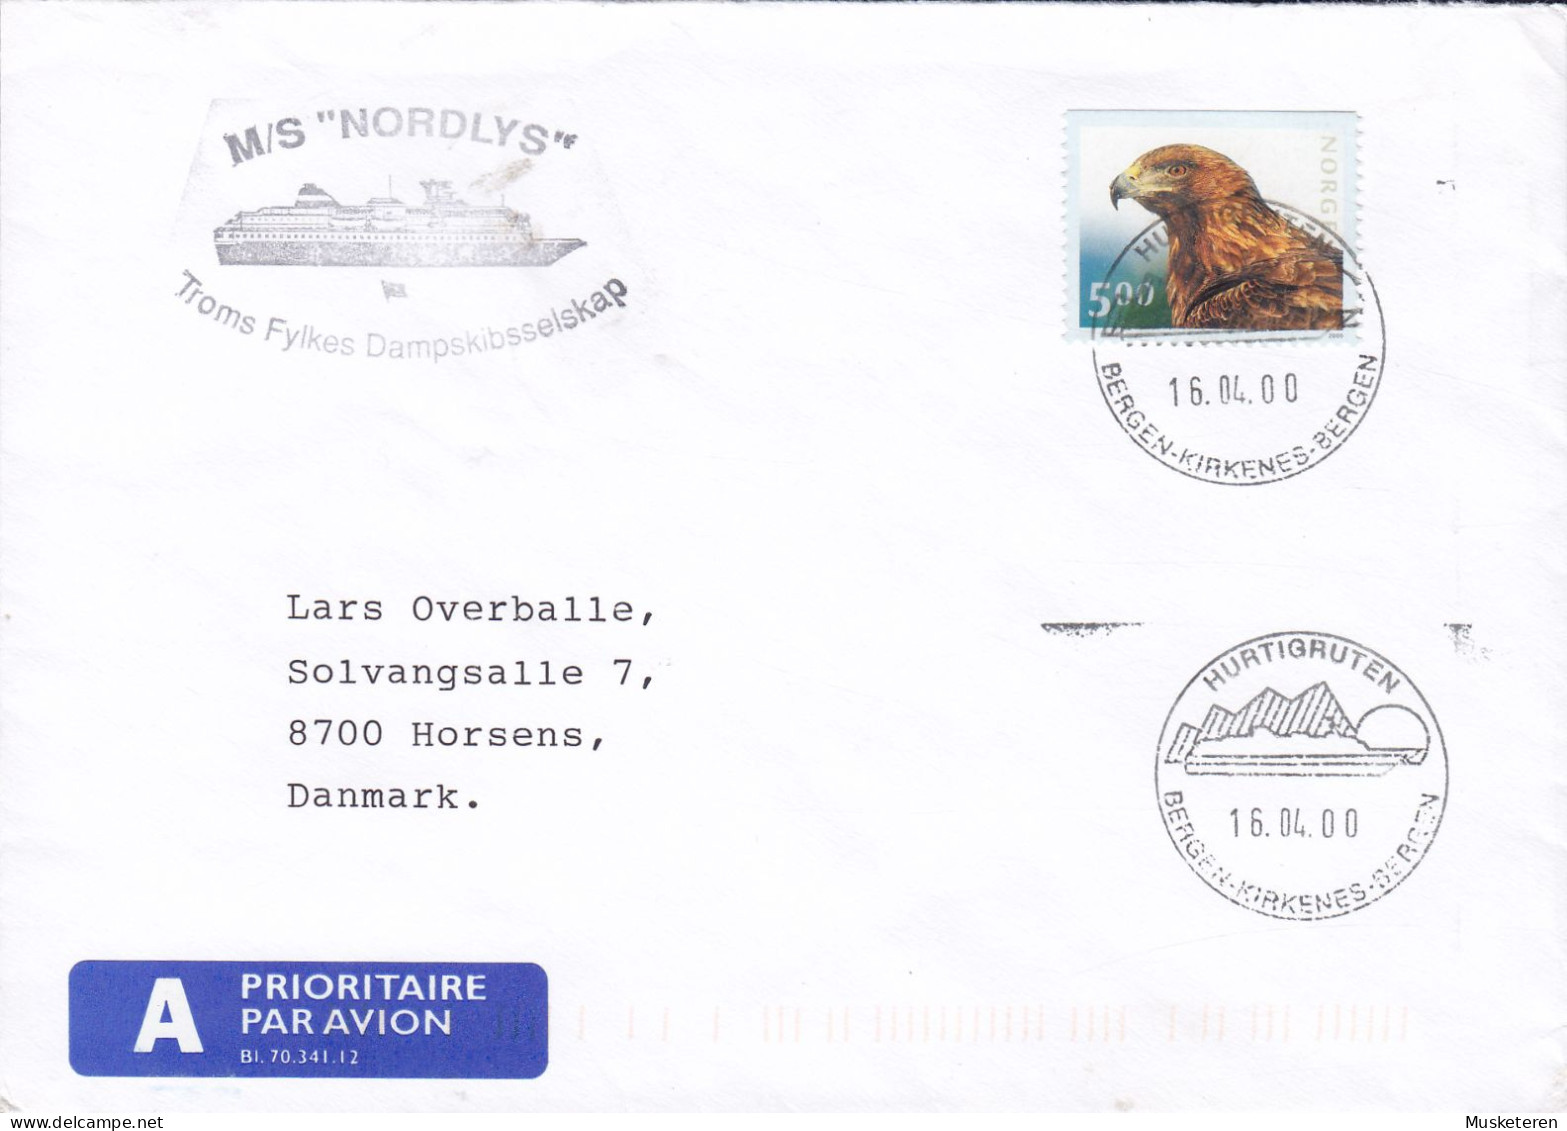 Norway A PRIORITAIRE Label M/S 'NORDLYS' Troms Fylkes Dampskibsselskab HURTIGRUTEN 2000 Cover Brief Eagle Adler - Briefe U. Dokumente